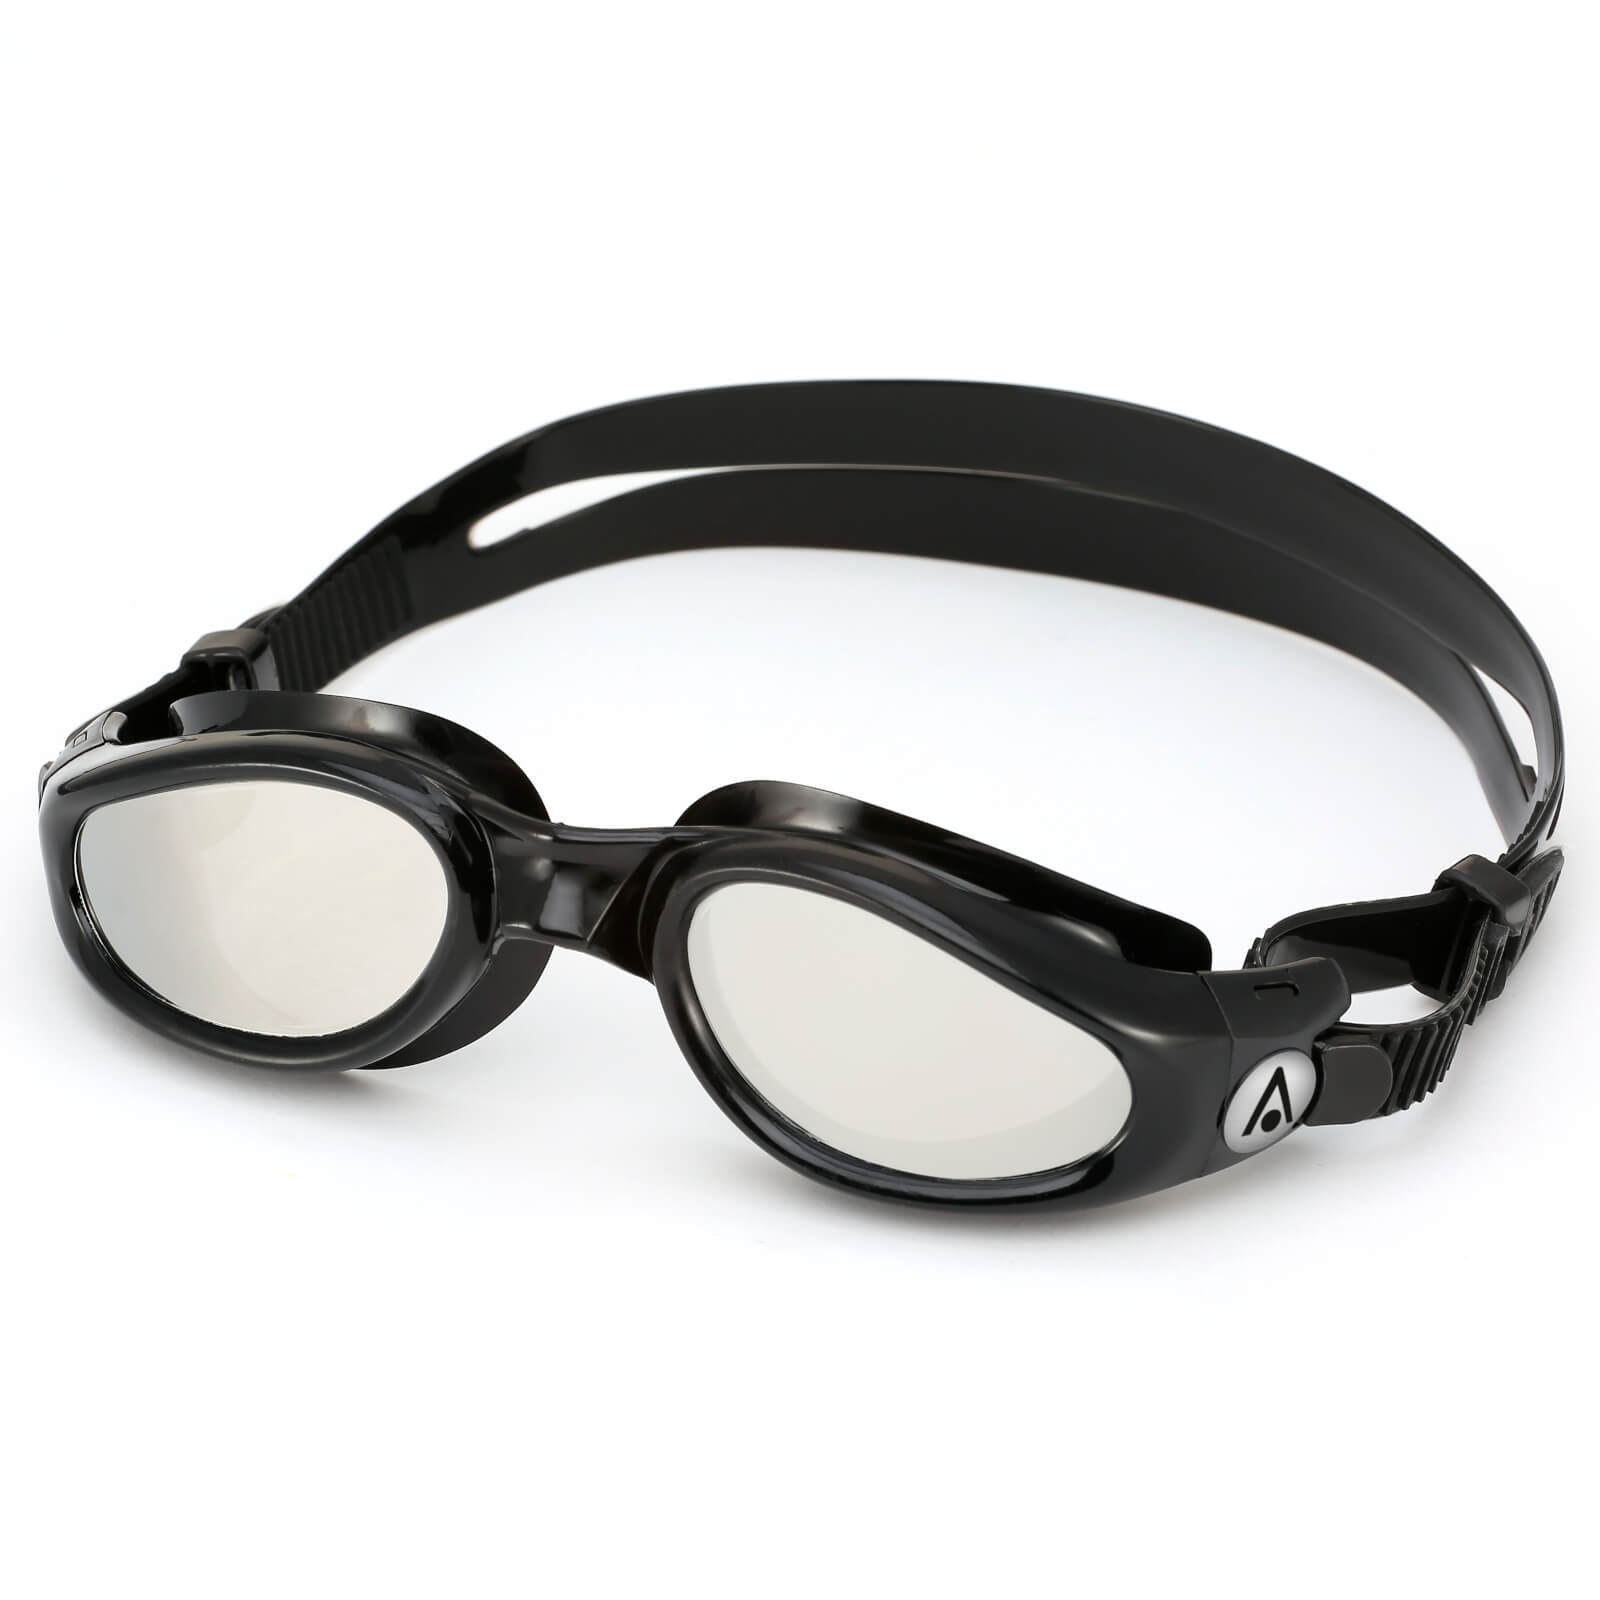 Men's Swimming Goggles Aqua Sphere Kaiman Adult Fitness Pool Black - Silver Mirrored